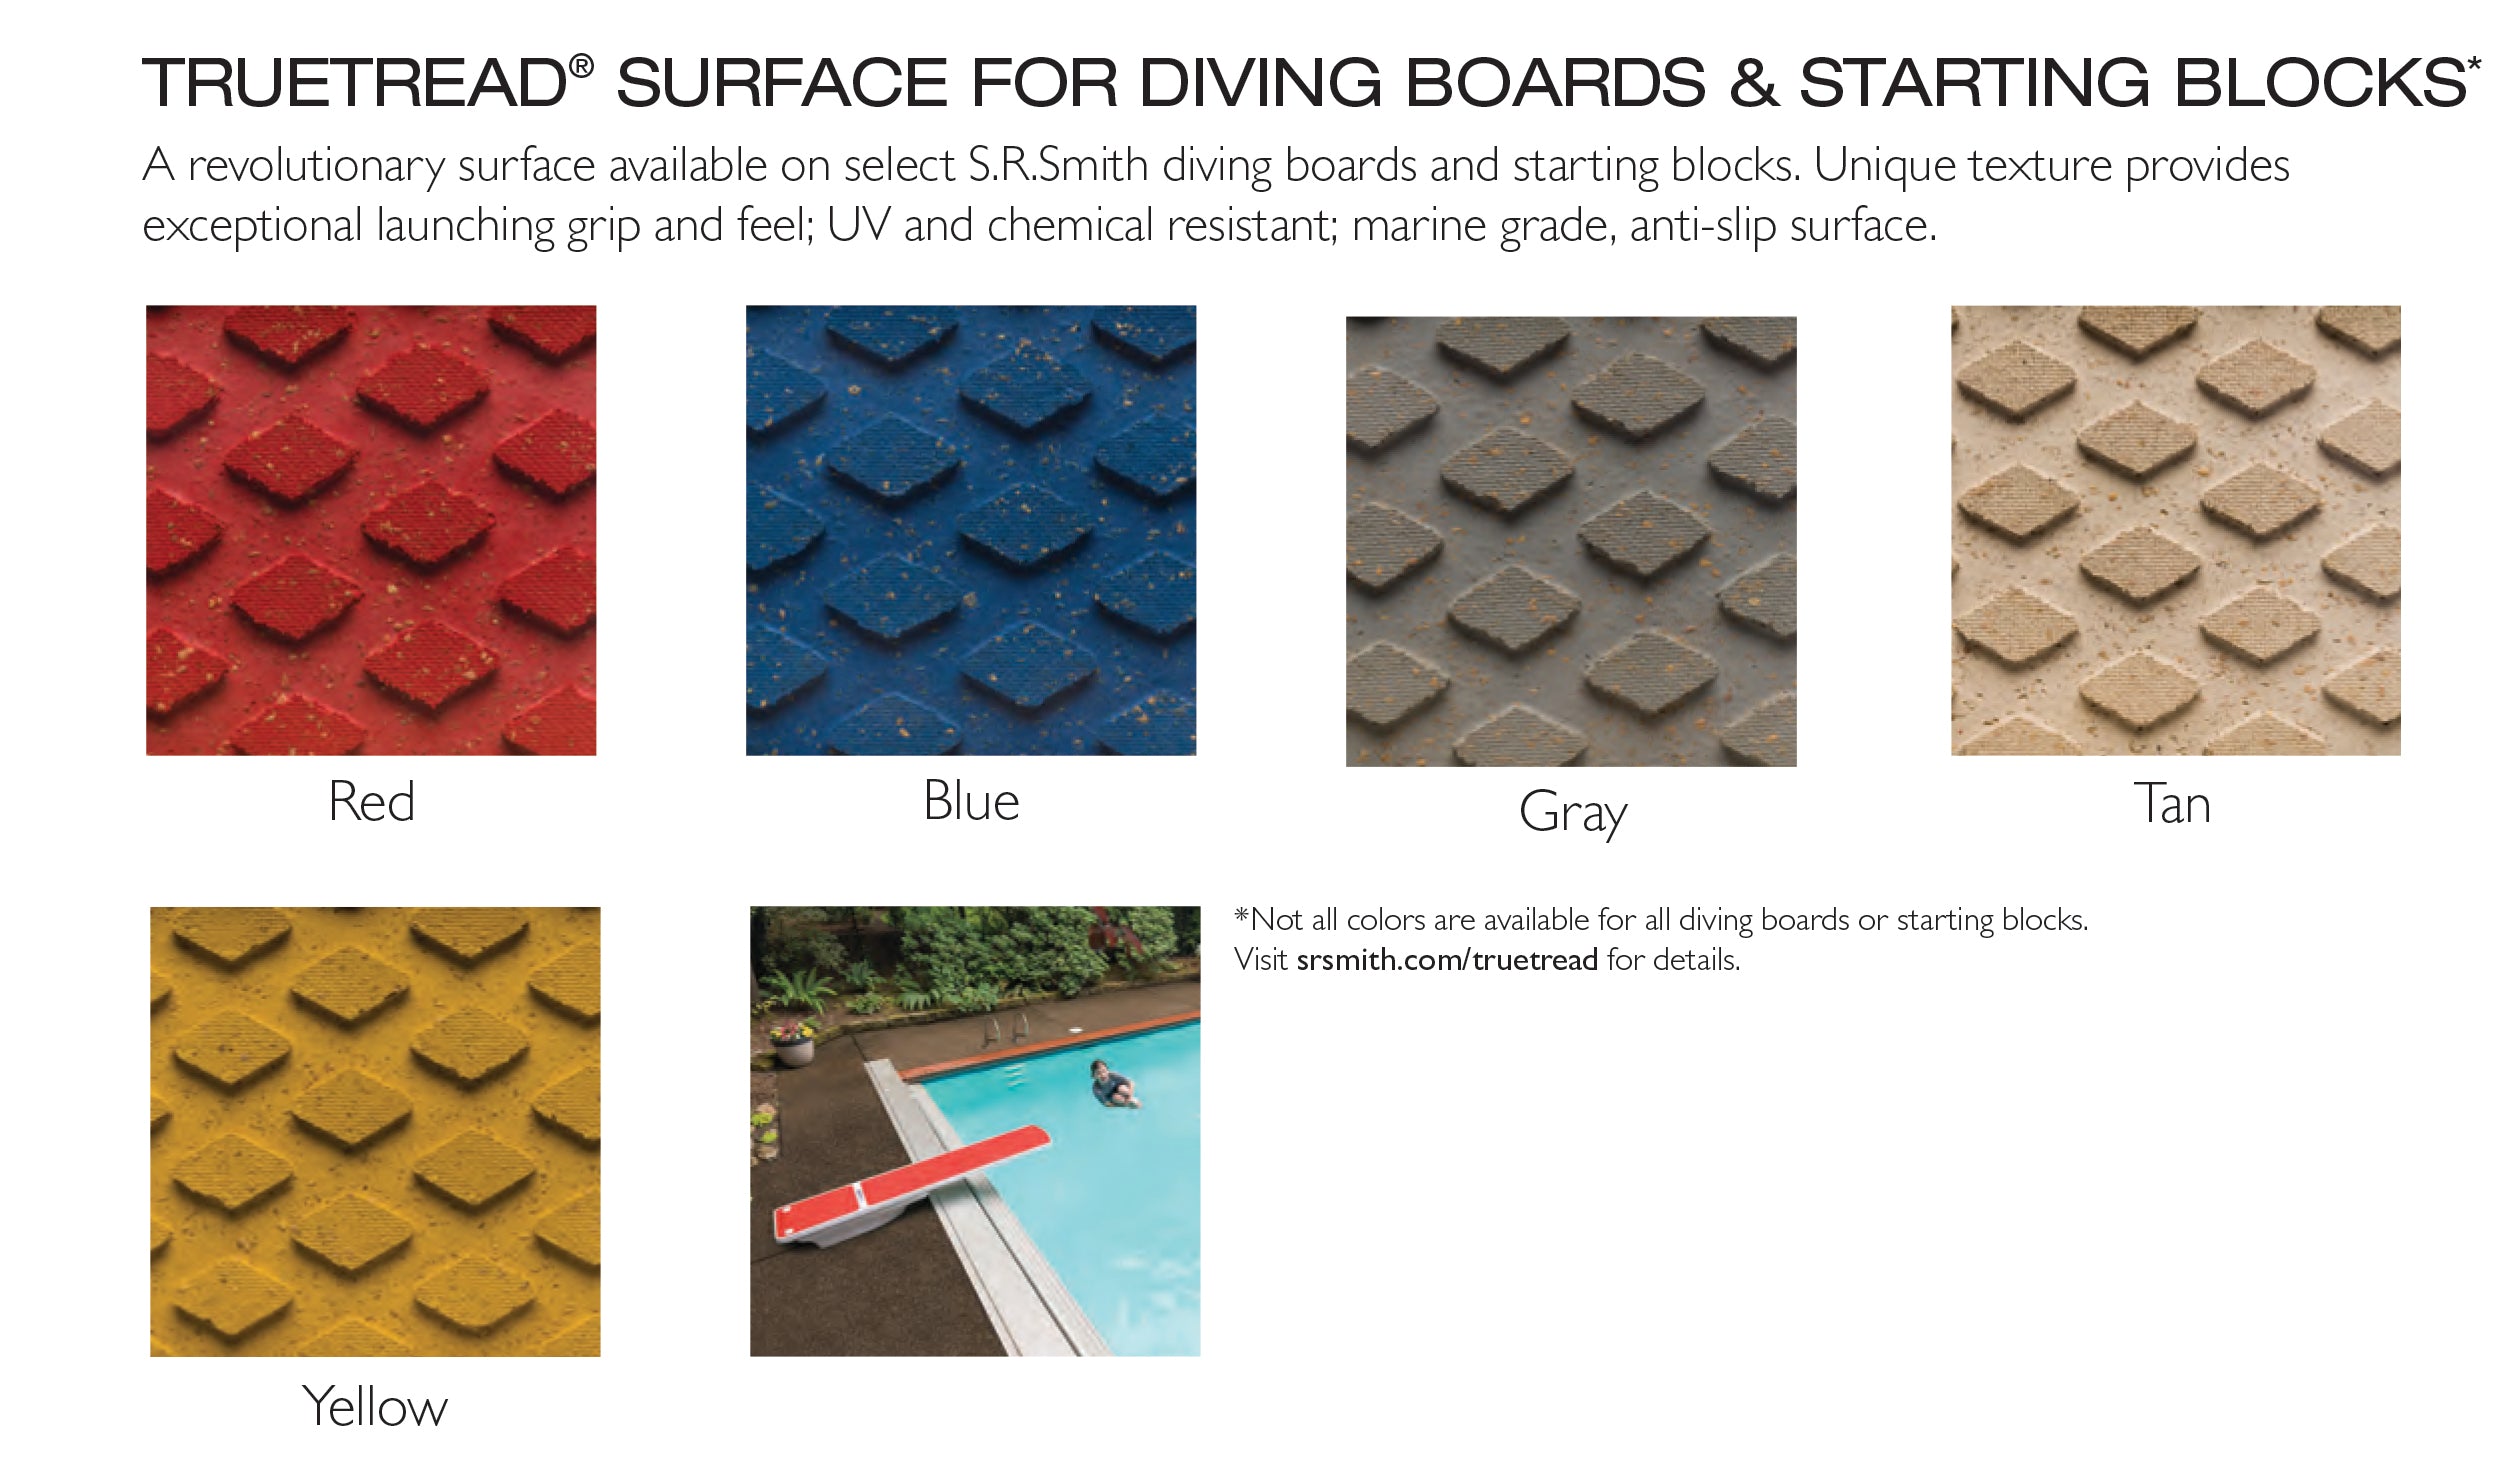 Flyte-Deck II Stand With 8 Foot TrueTread Board - White Stand and Board With Gray TrueTread